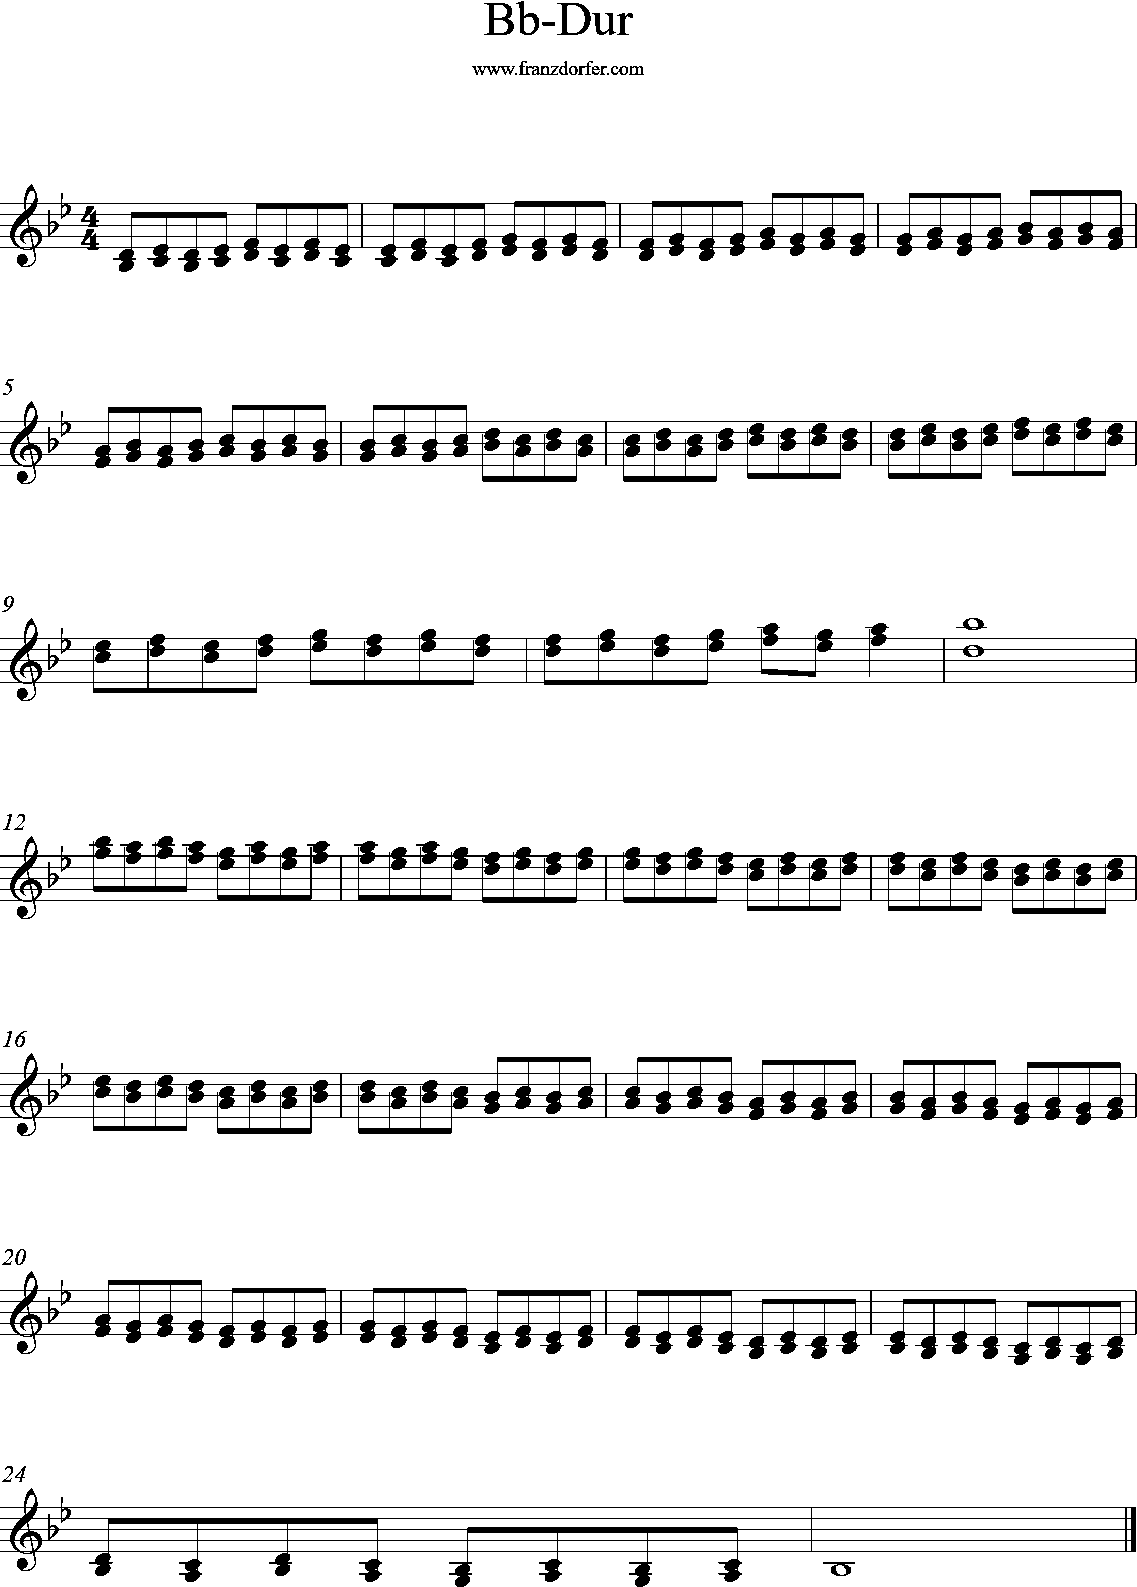 Bb-Dur Tonleiter Akkordeon, Terzen-2